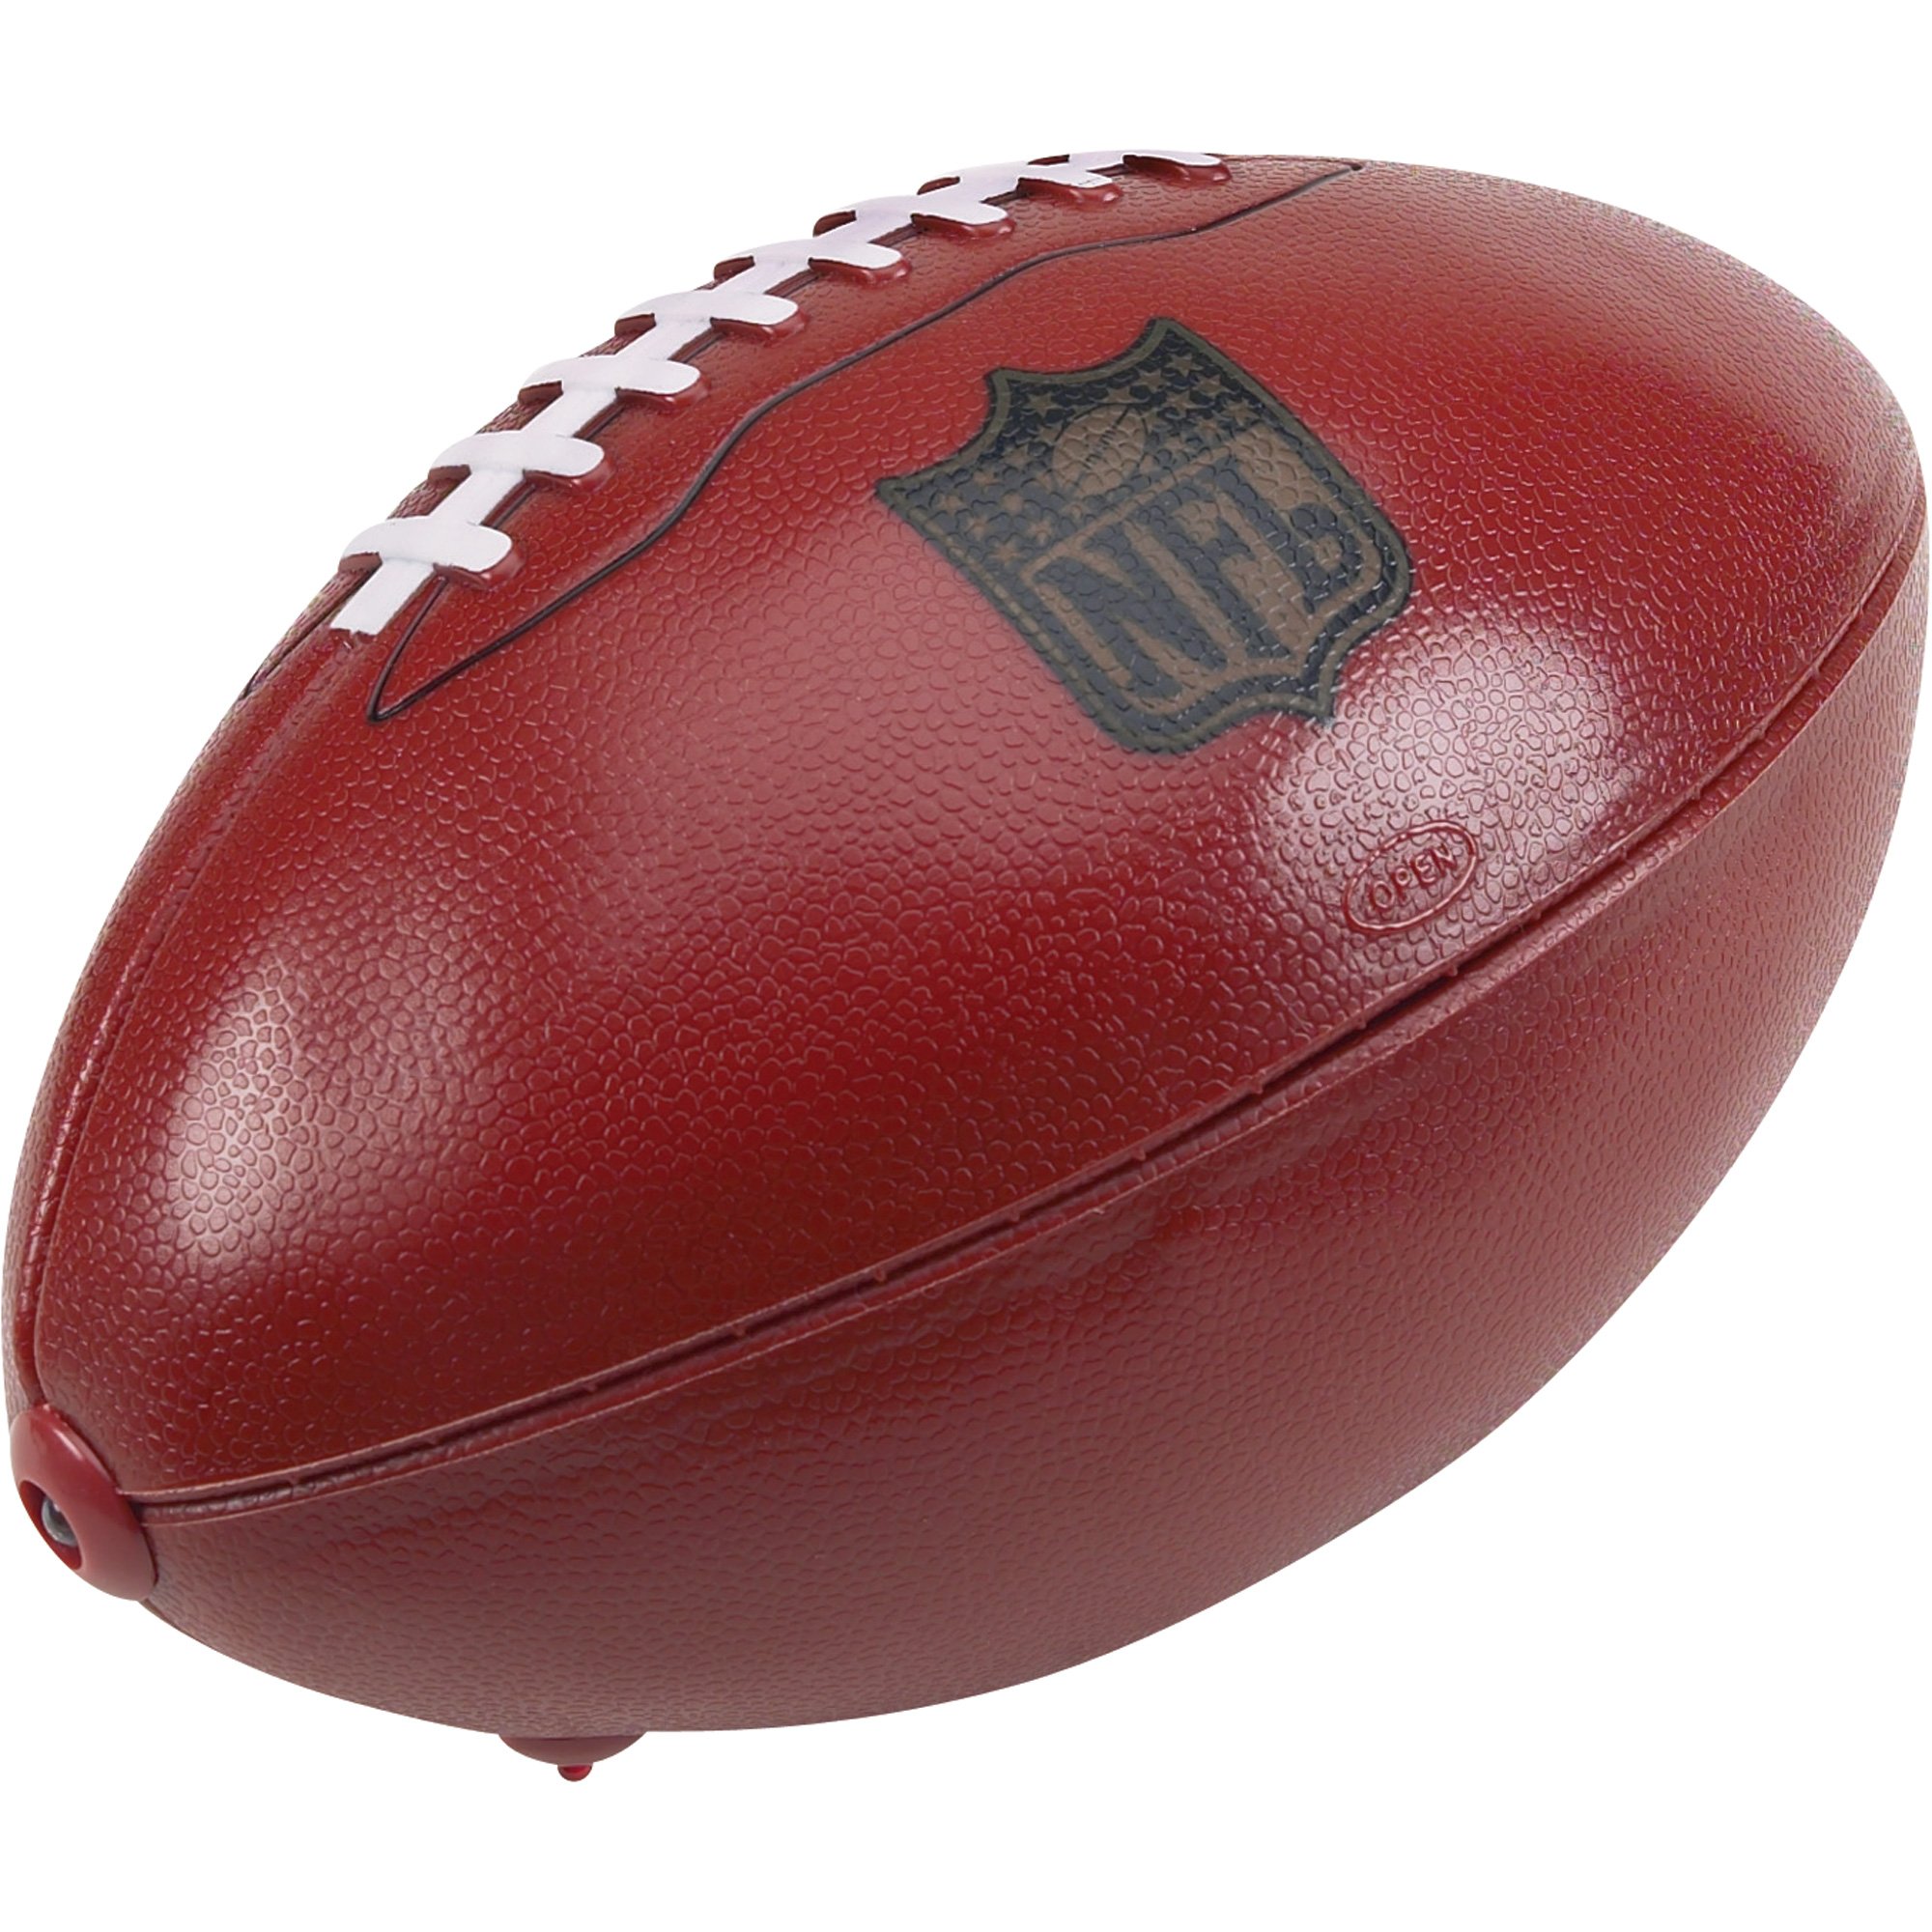 Excalibur Electronics 7-in-1 NFL Football Remote - Model# 201-NFL-CS